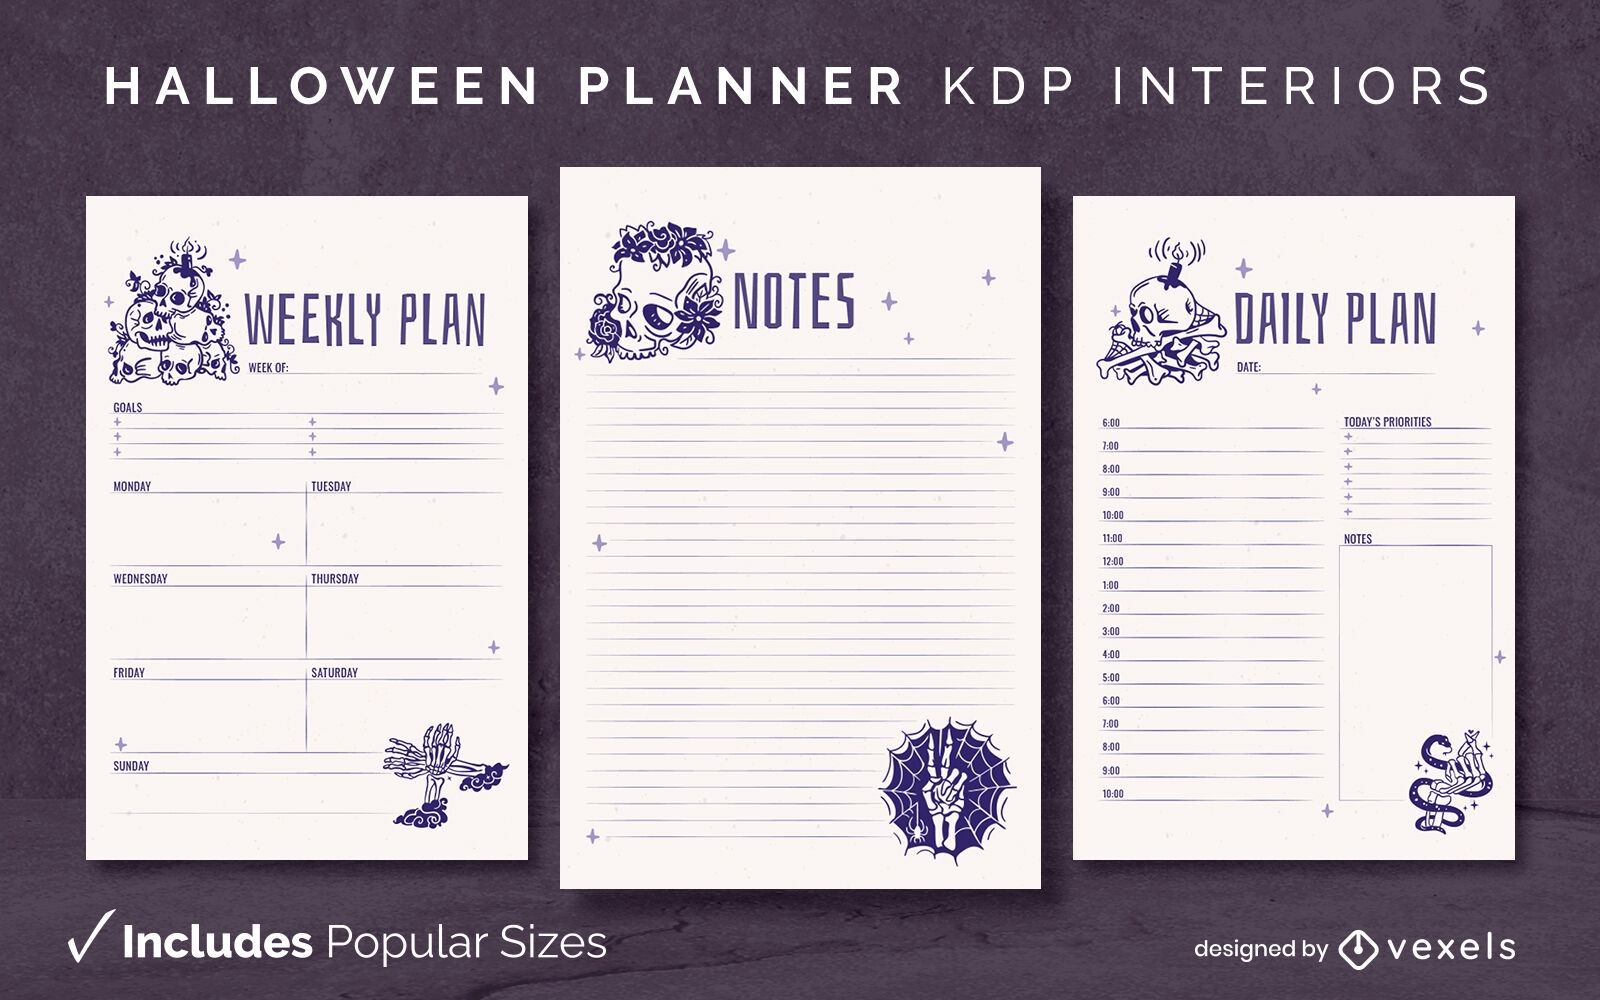 Plantilla de diario de esqueletos del planificador de Halloween Dise?o de interiores KDP